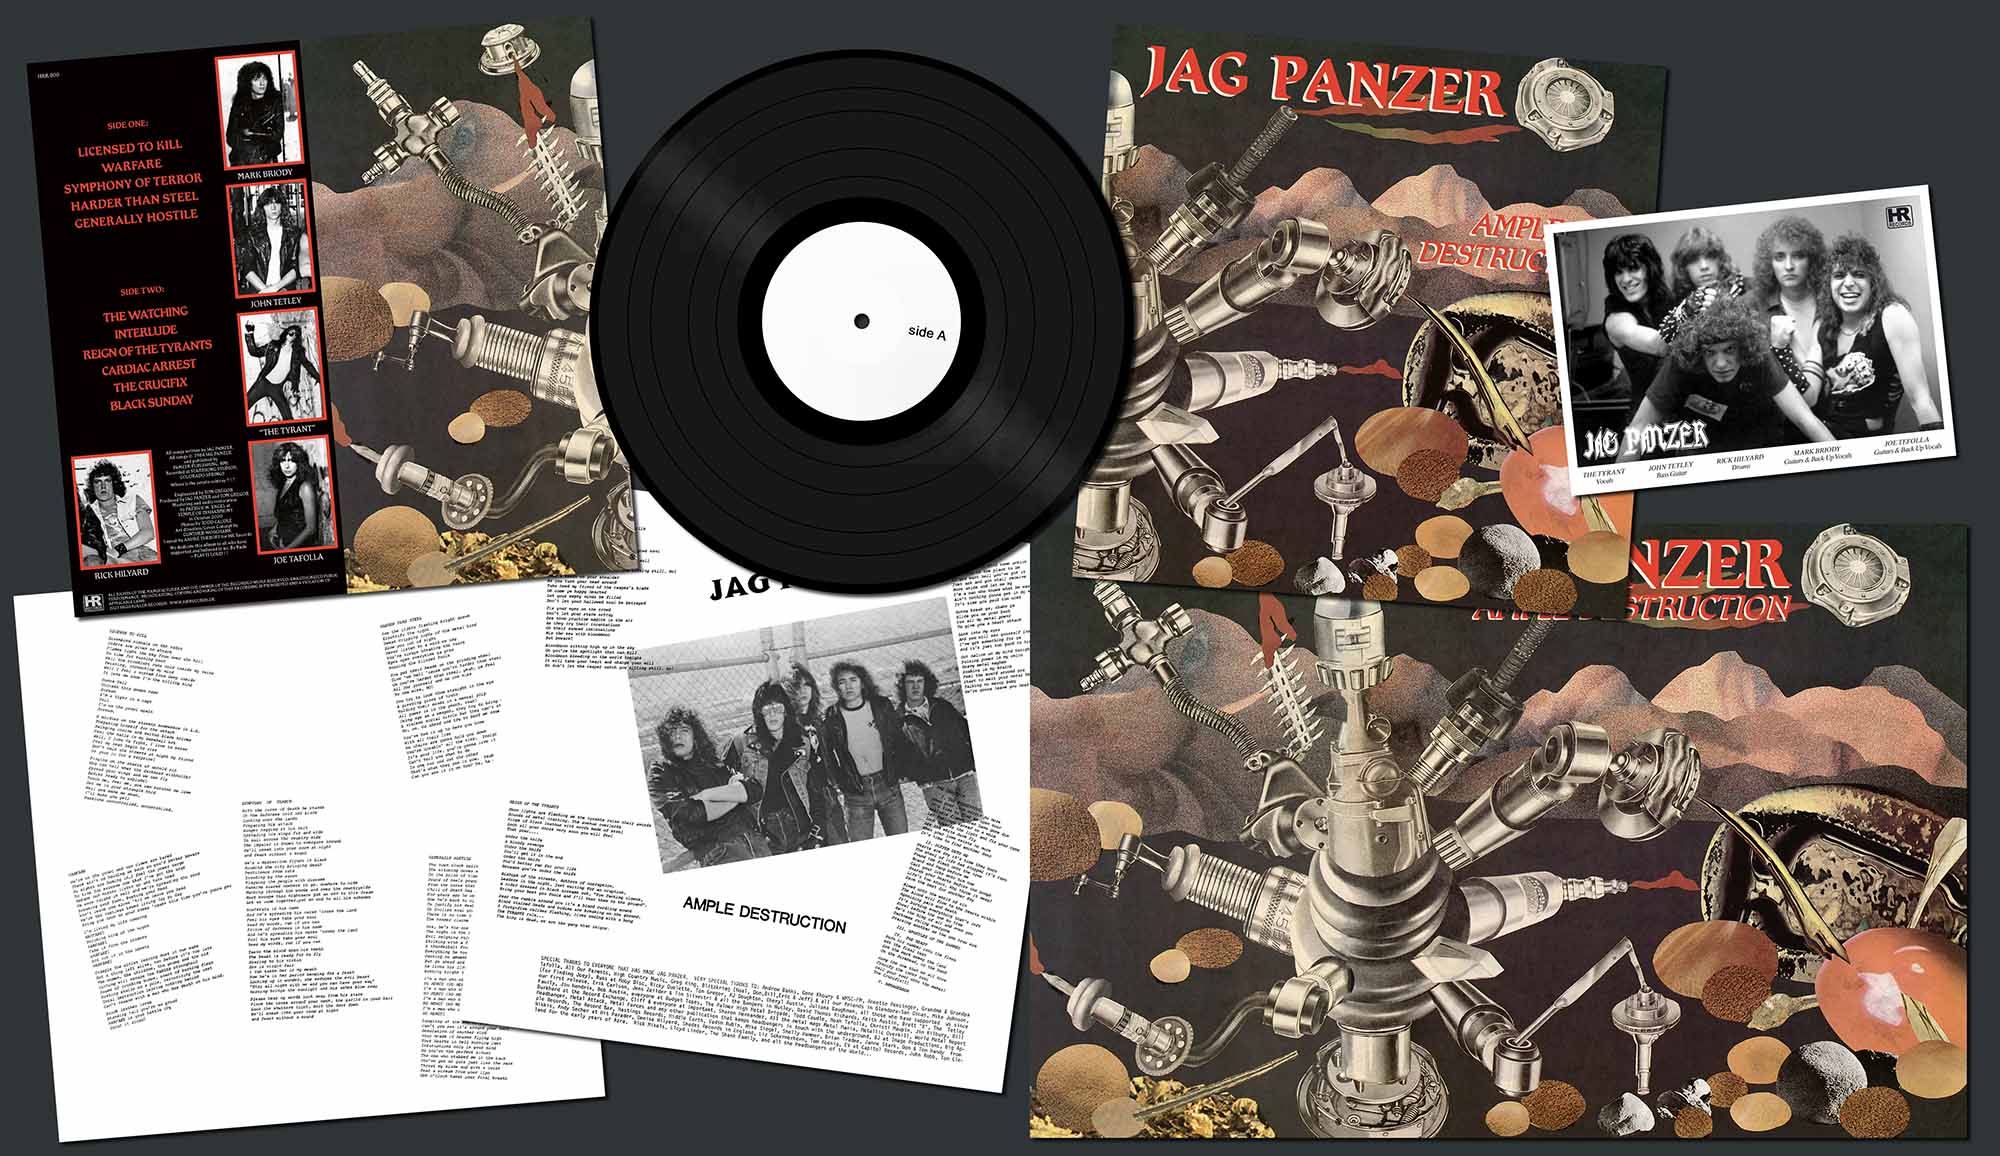 JAG PANZER - Ample Destruction  LP  ORIGINAL MIX  CANADA COVER